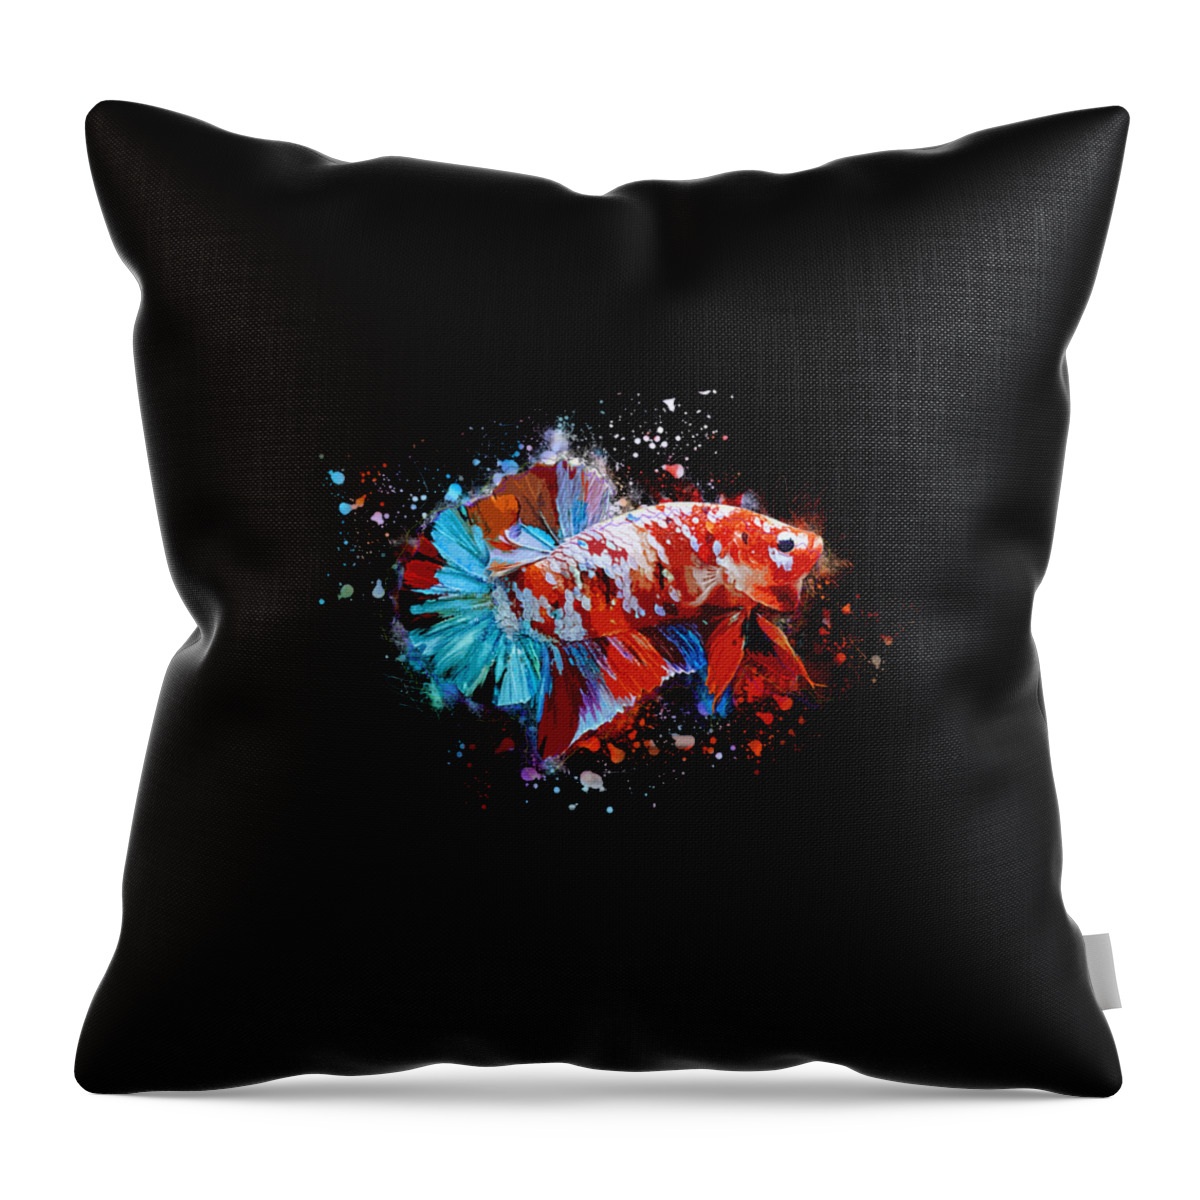 Artistic Throw Pillow featuring the digital art Artistic Galaxy Koi Betta Fish by Sambel Pedes